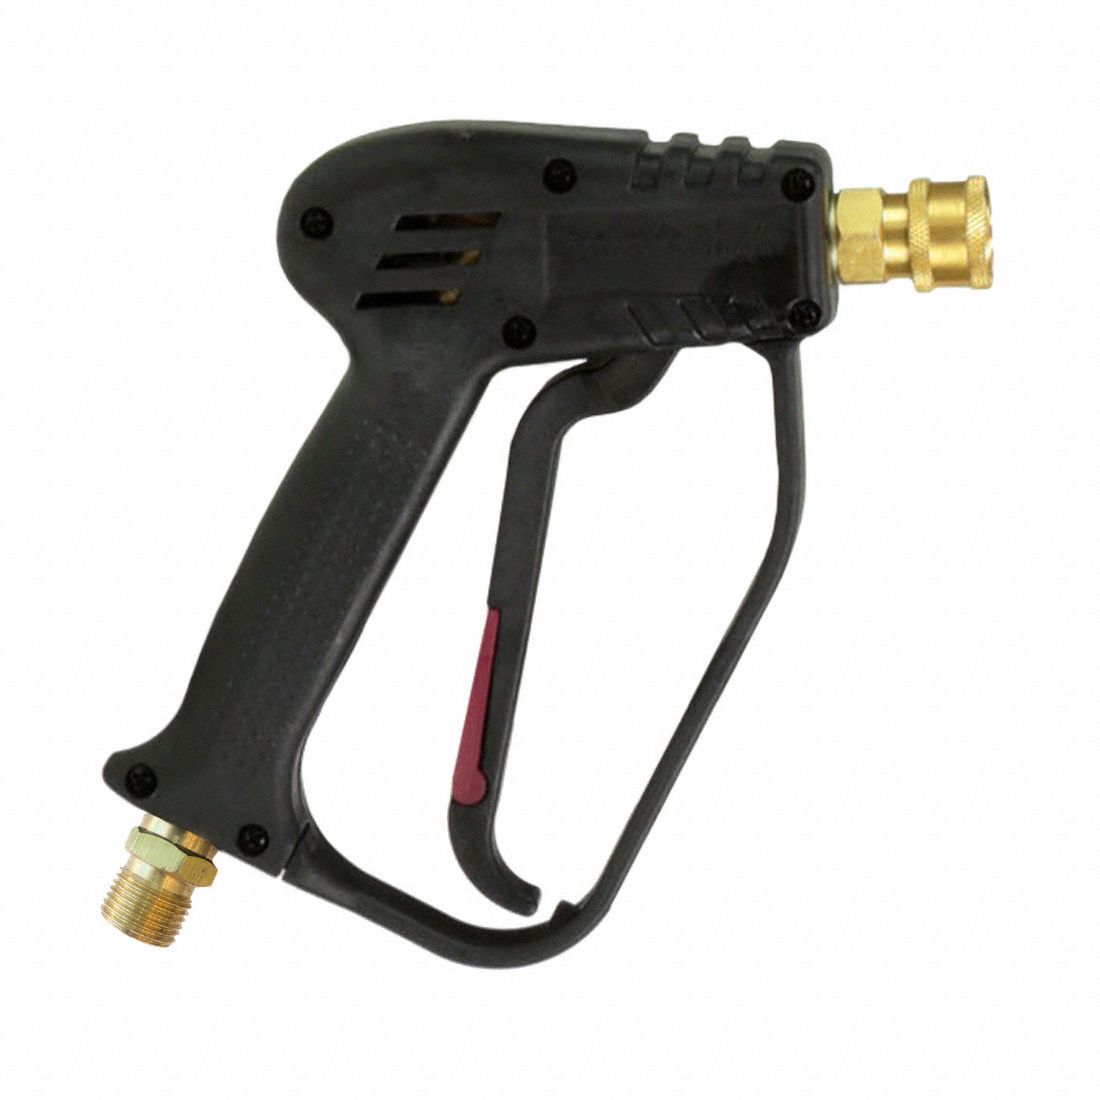 FlowZone(R) Spray Gun: FlowZone(R) Spray Gun, For 53JE36/61UG97/61UH01, Fits Flowzone Brand